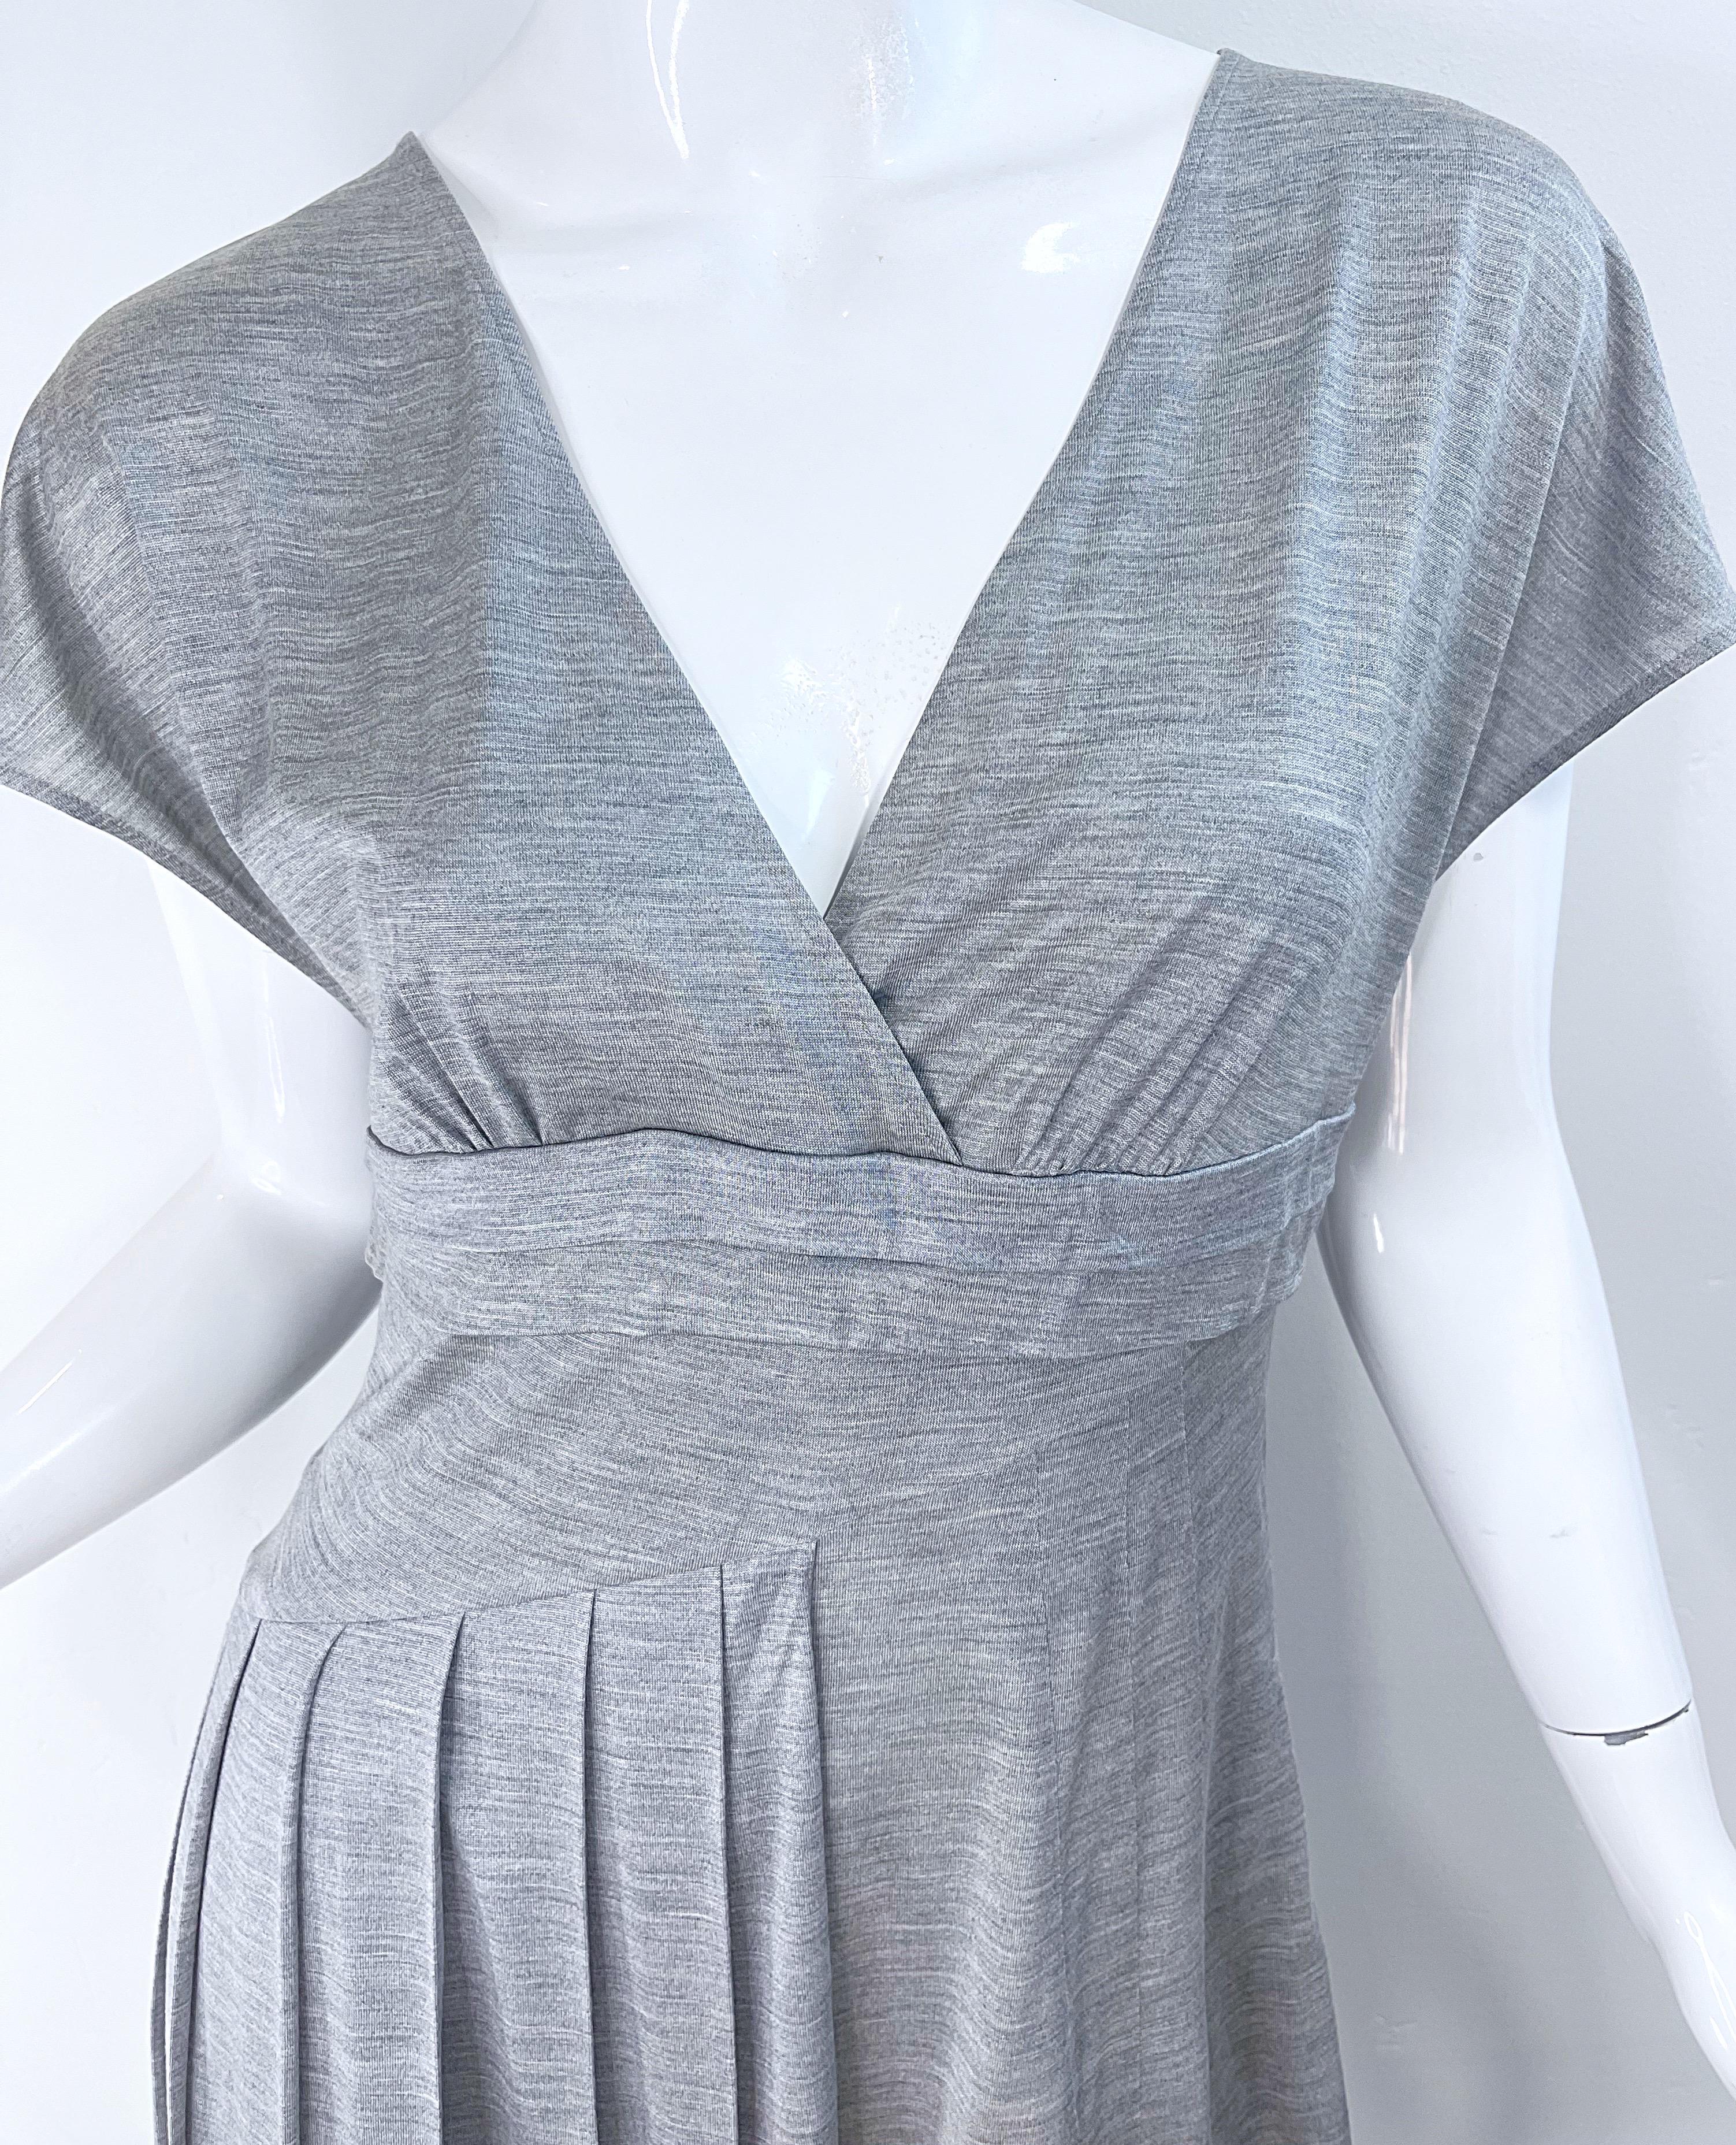 Women's Christian Dior by John Galliano Spring 2007 Size 8 Grey Silk Short Sleeve Dress